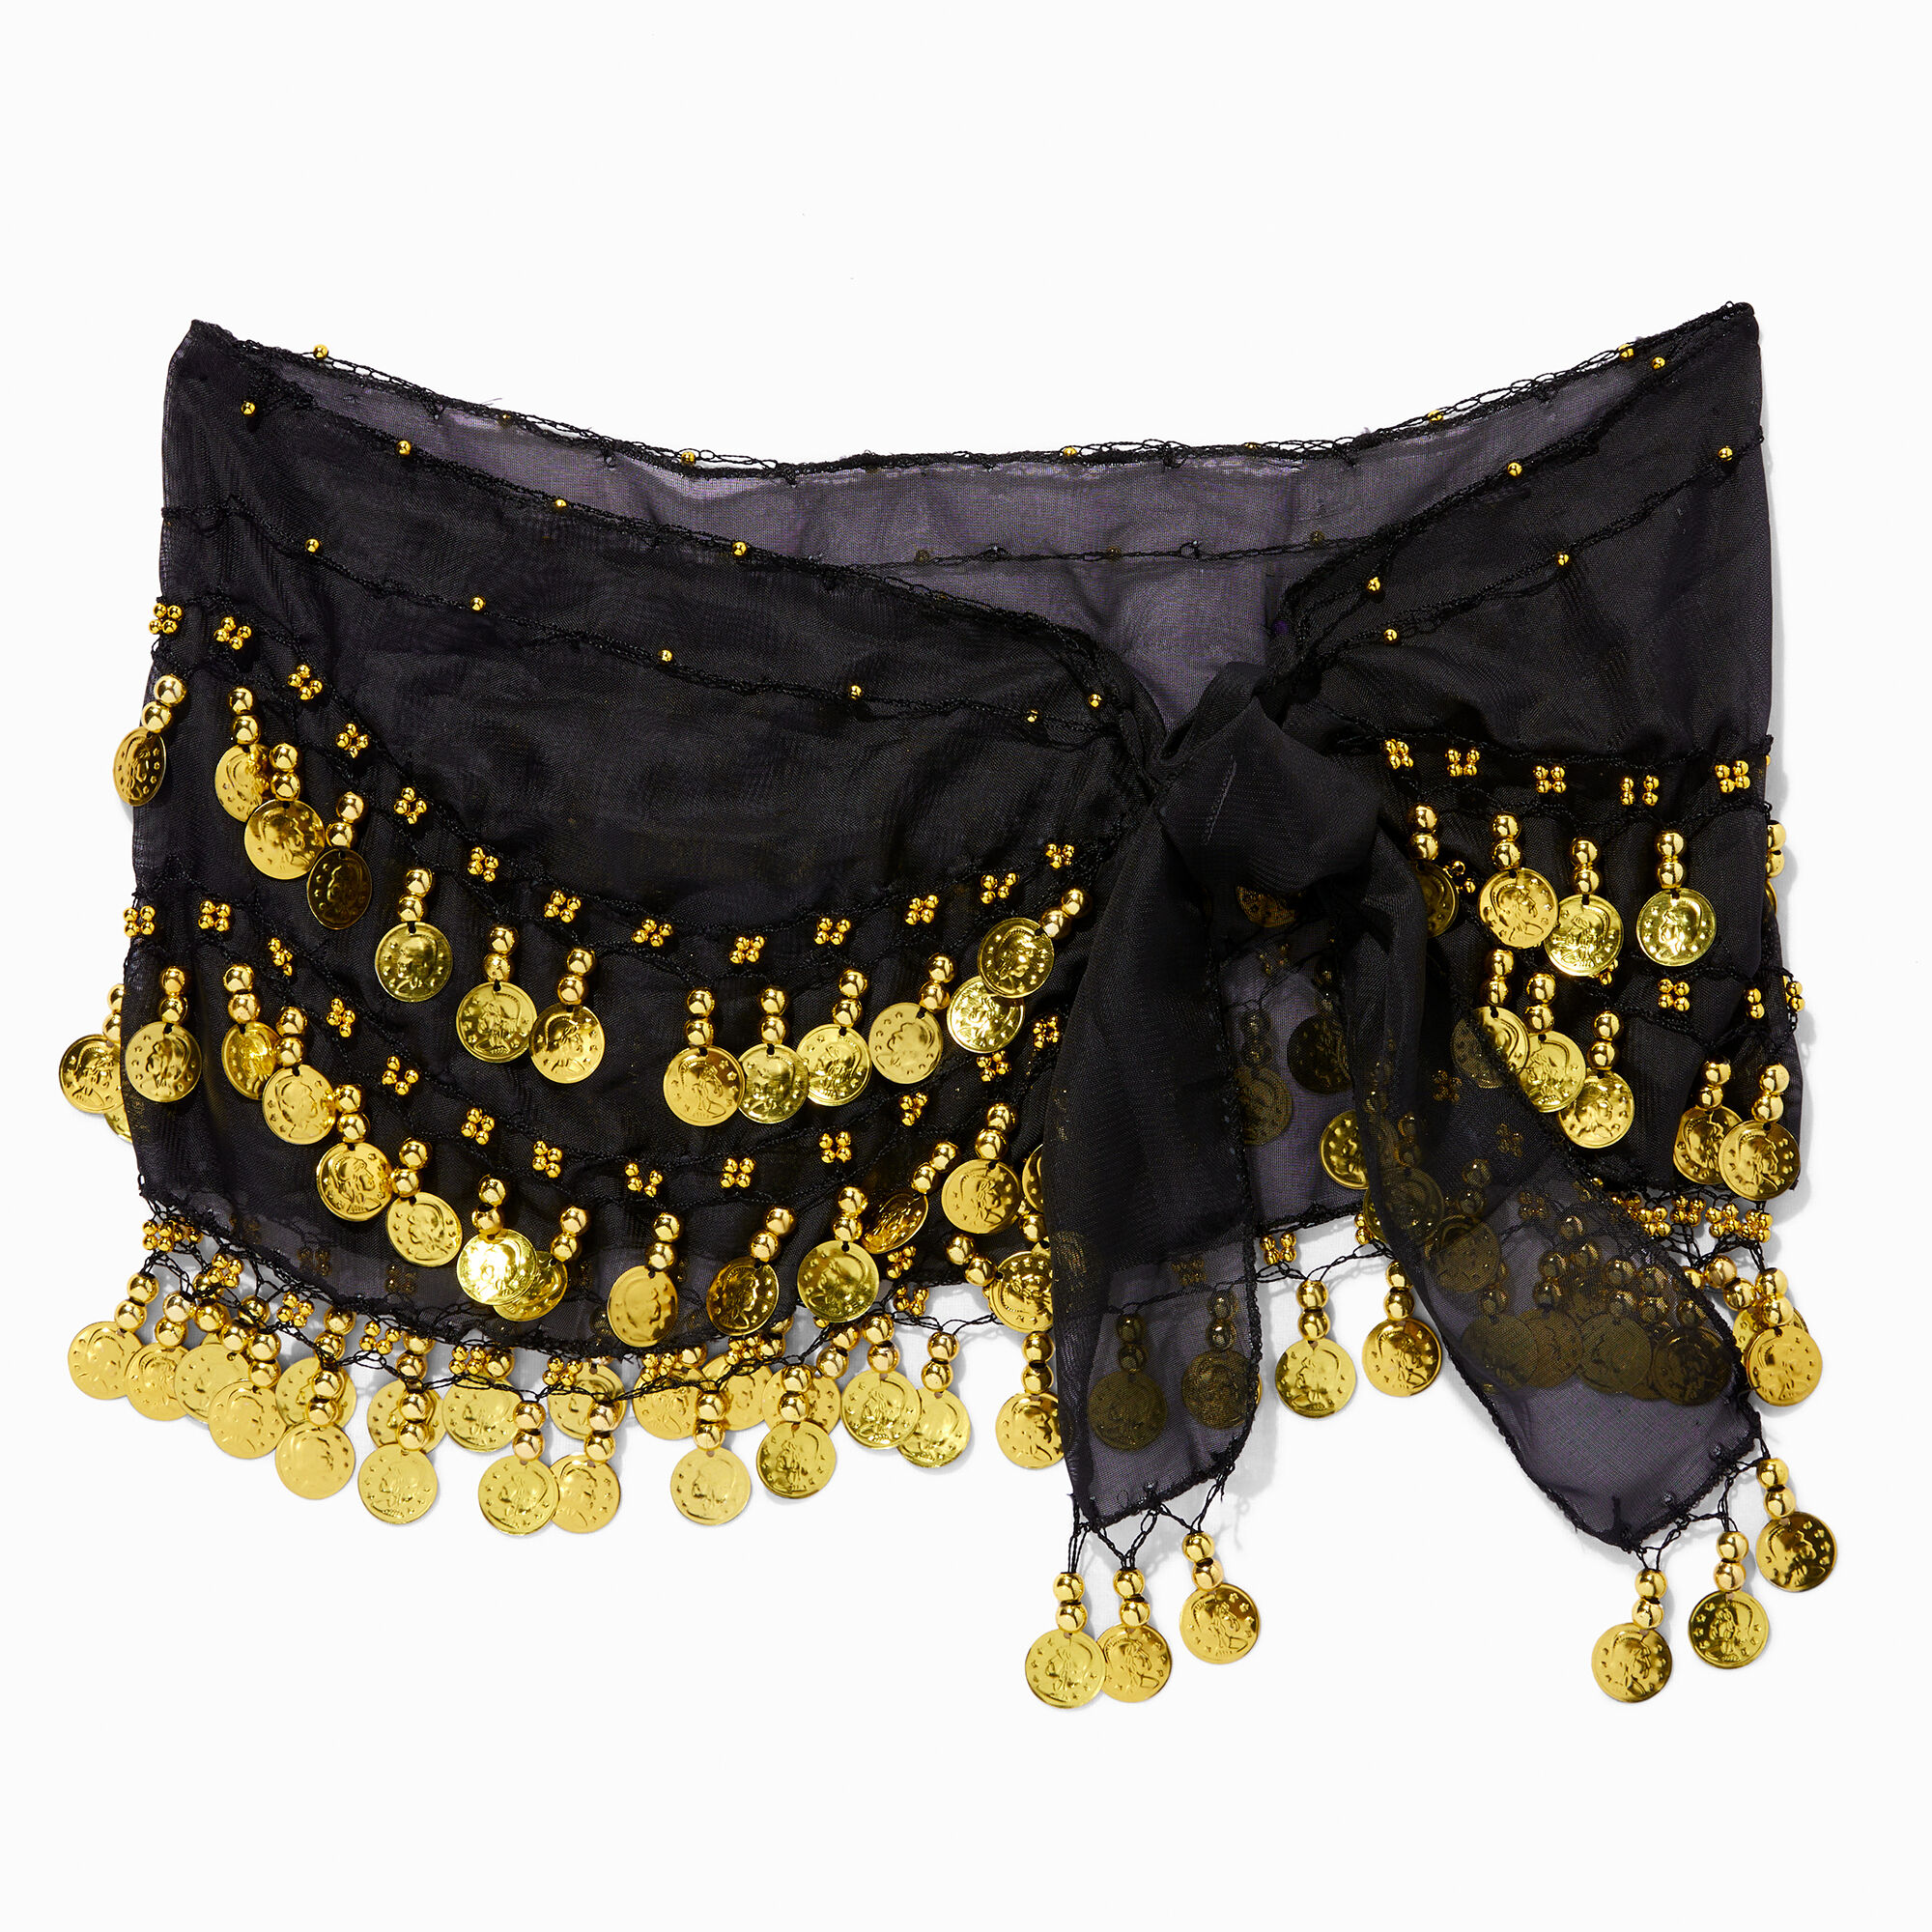 View Claires Fortune Teller Golden Coin Wrap Skirt Black information